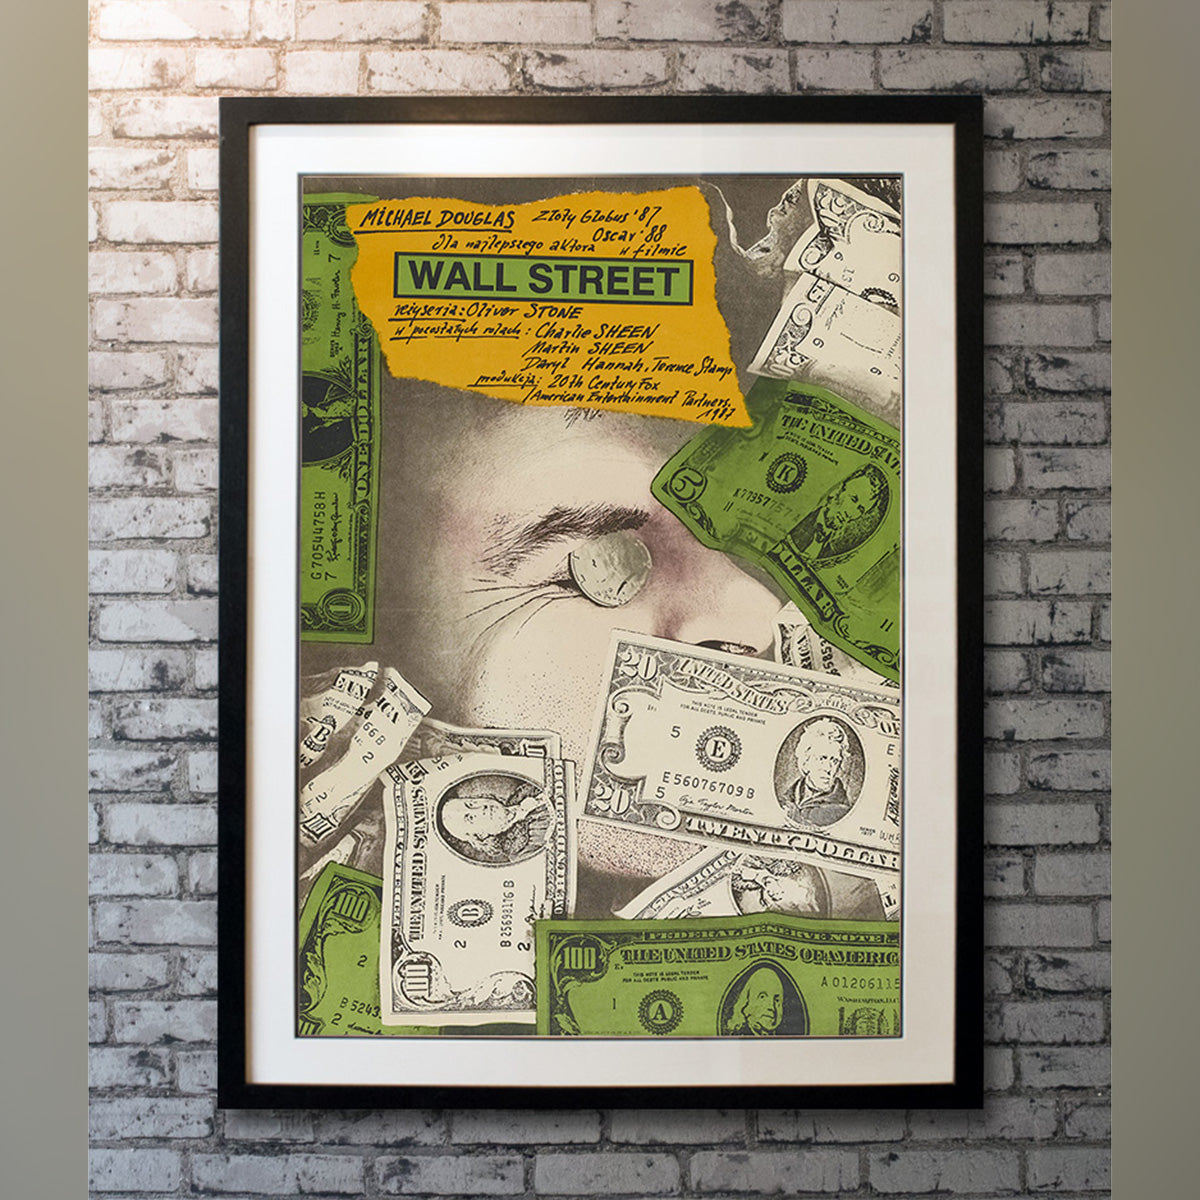 Original Movie Poster of Wall Street (1987)